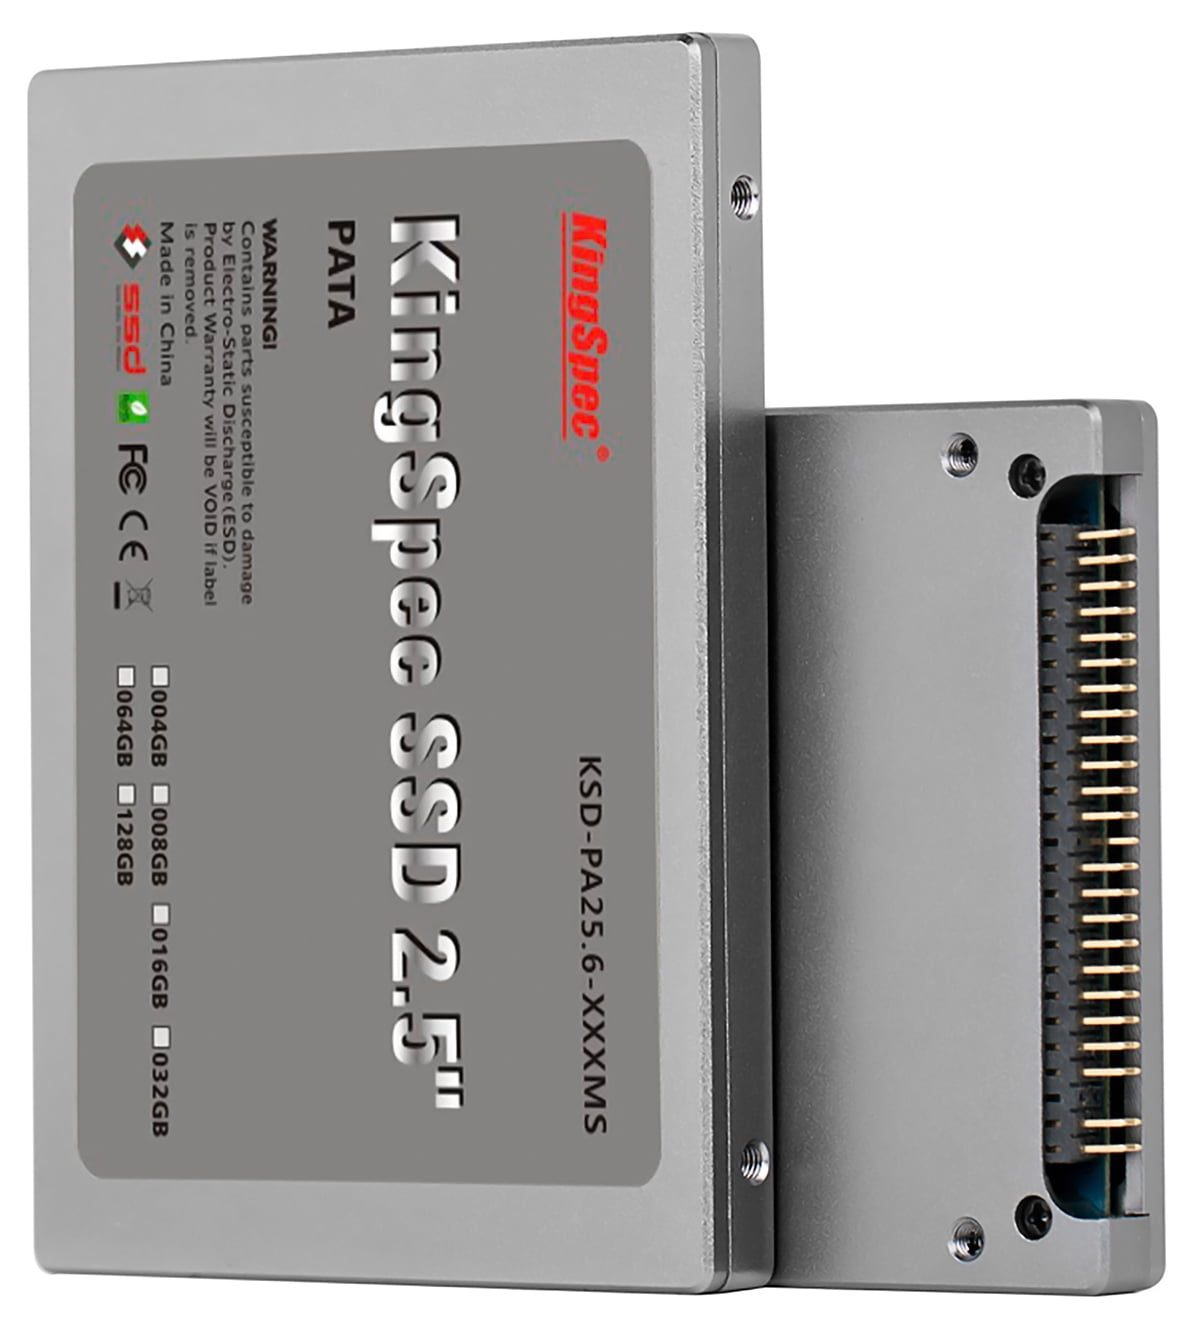 256GB KingSpec 2.5-inch SSD Solid State Disk (MLC Flash) SM2236 - Walmart.com